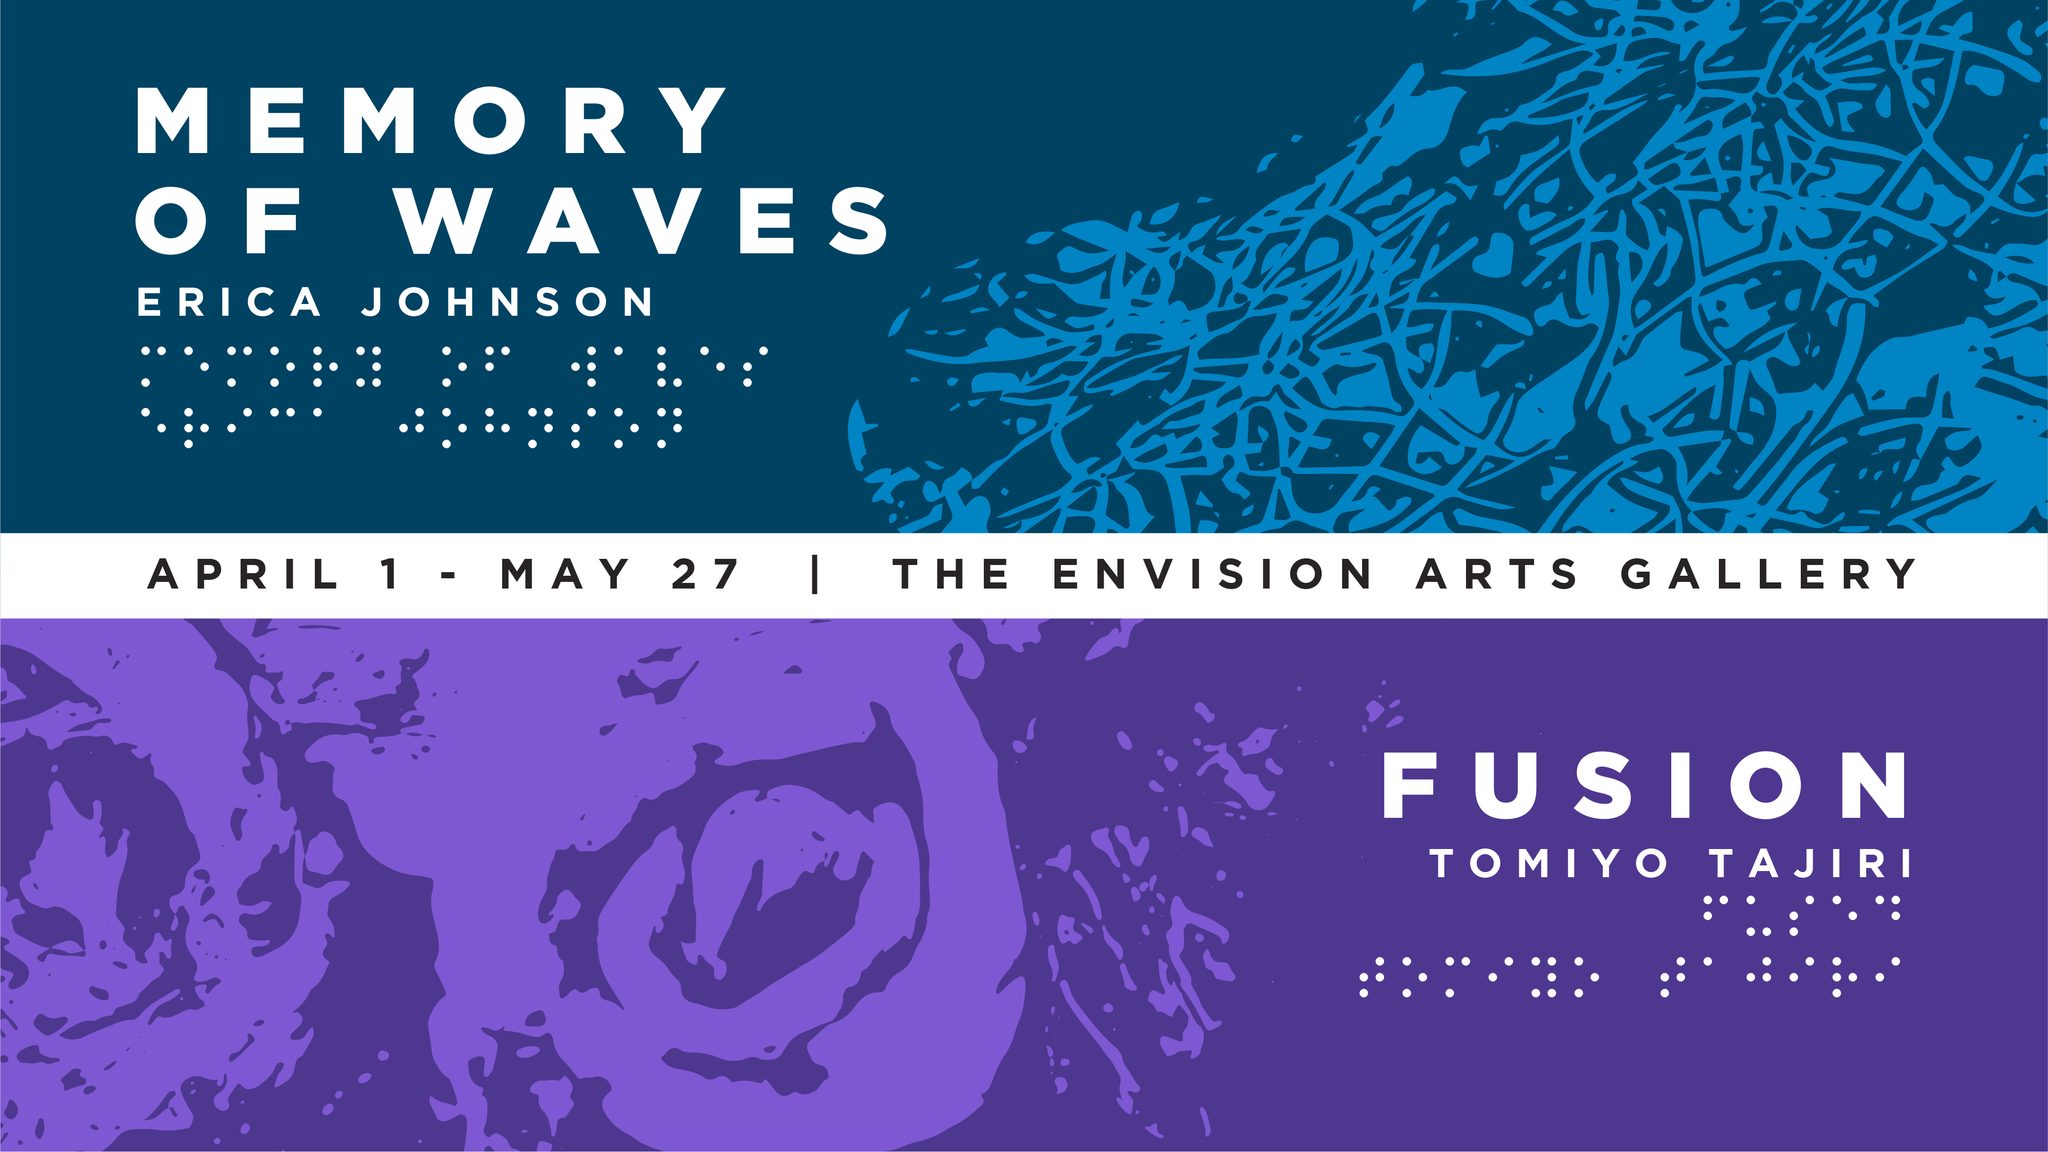 Memory of Waves by Erica Johnson and Fusion by Tomiyo Tajiri